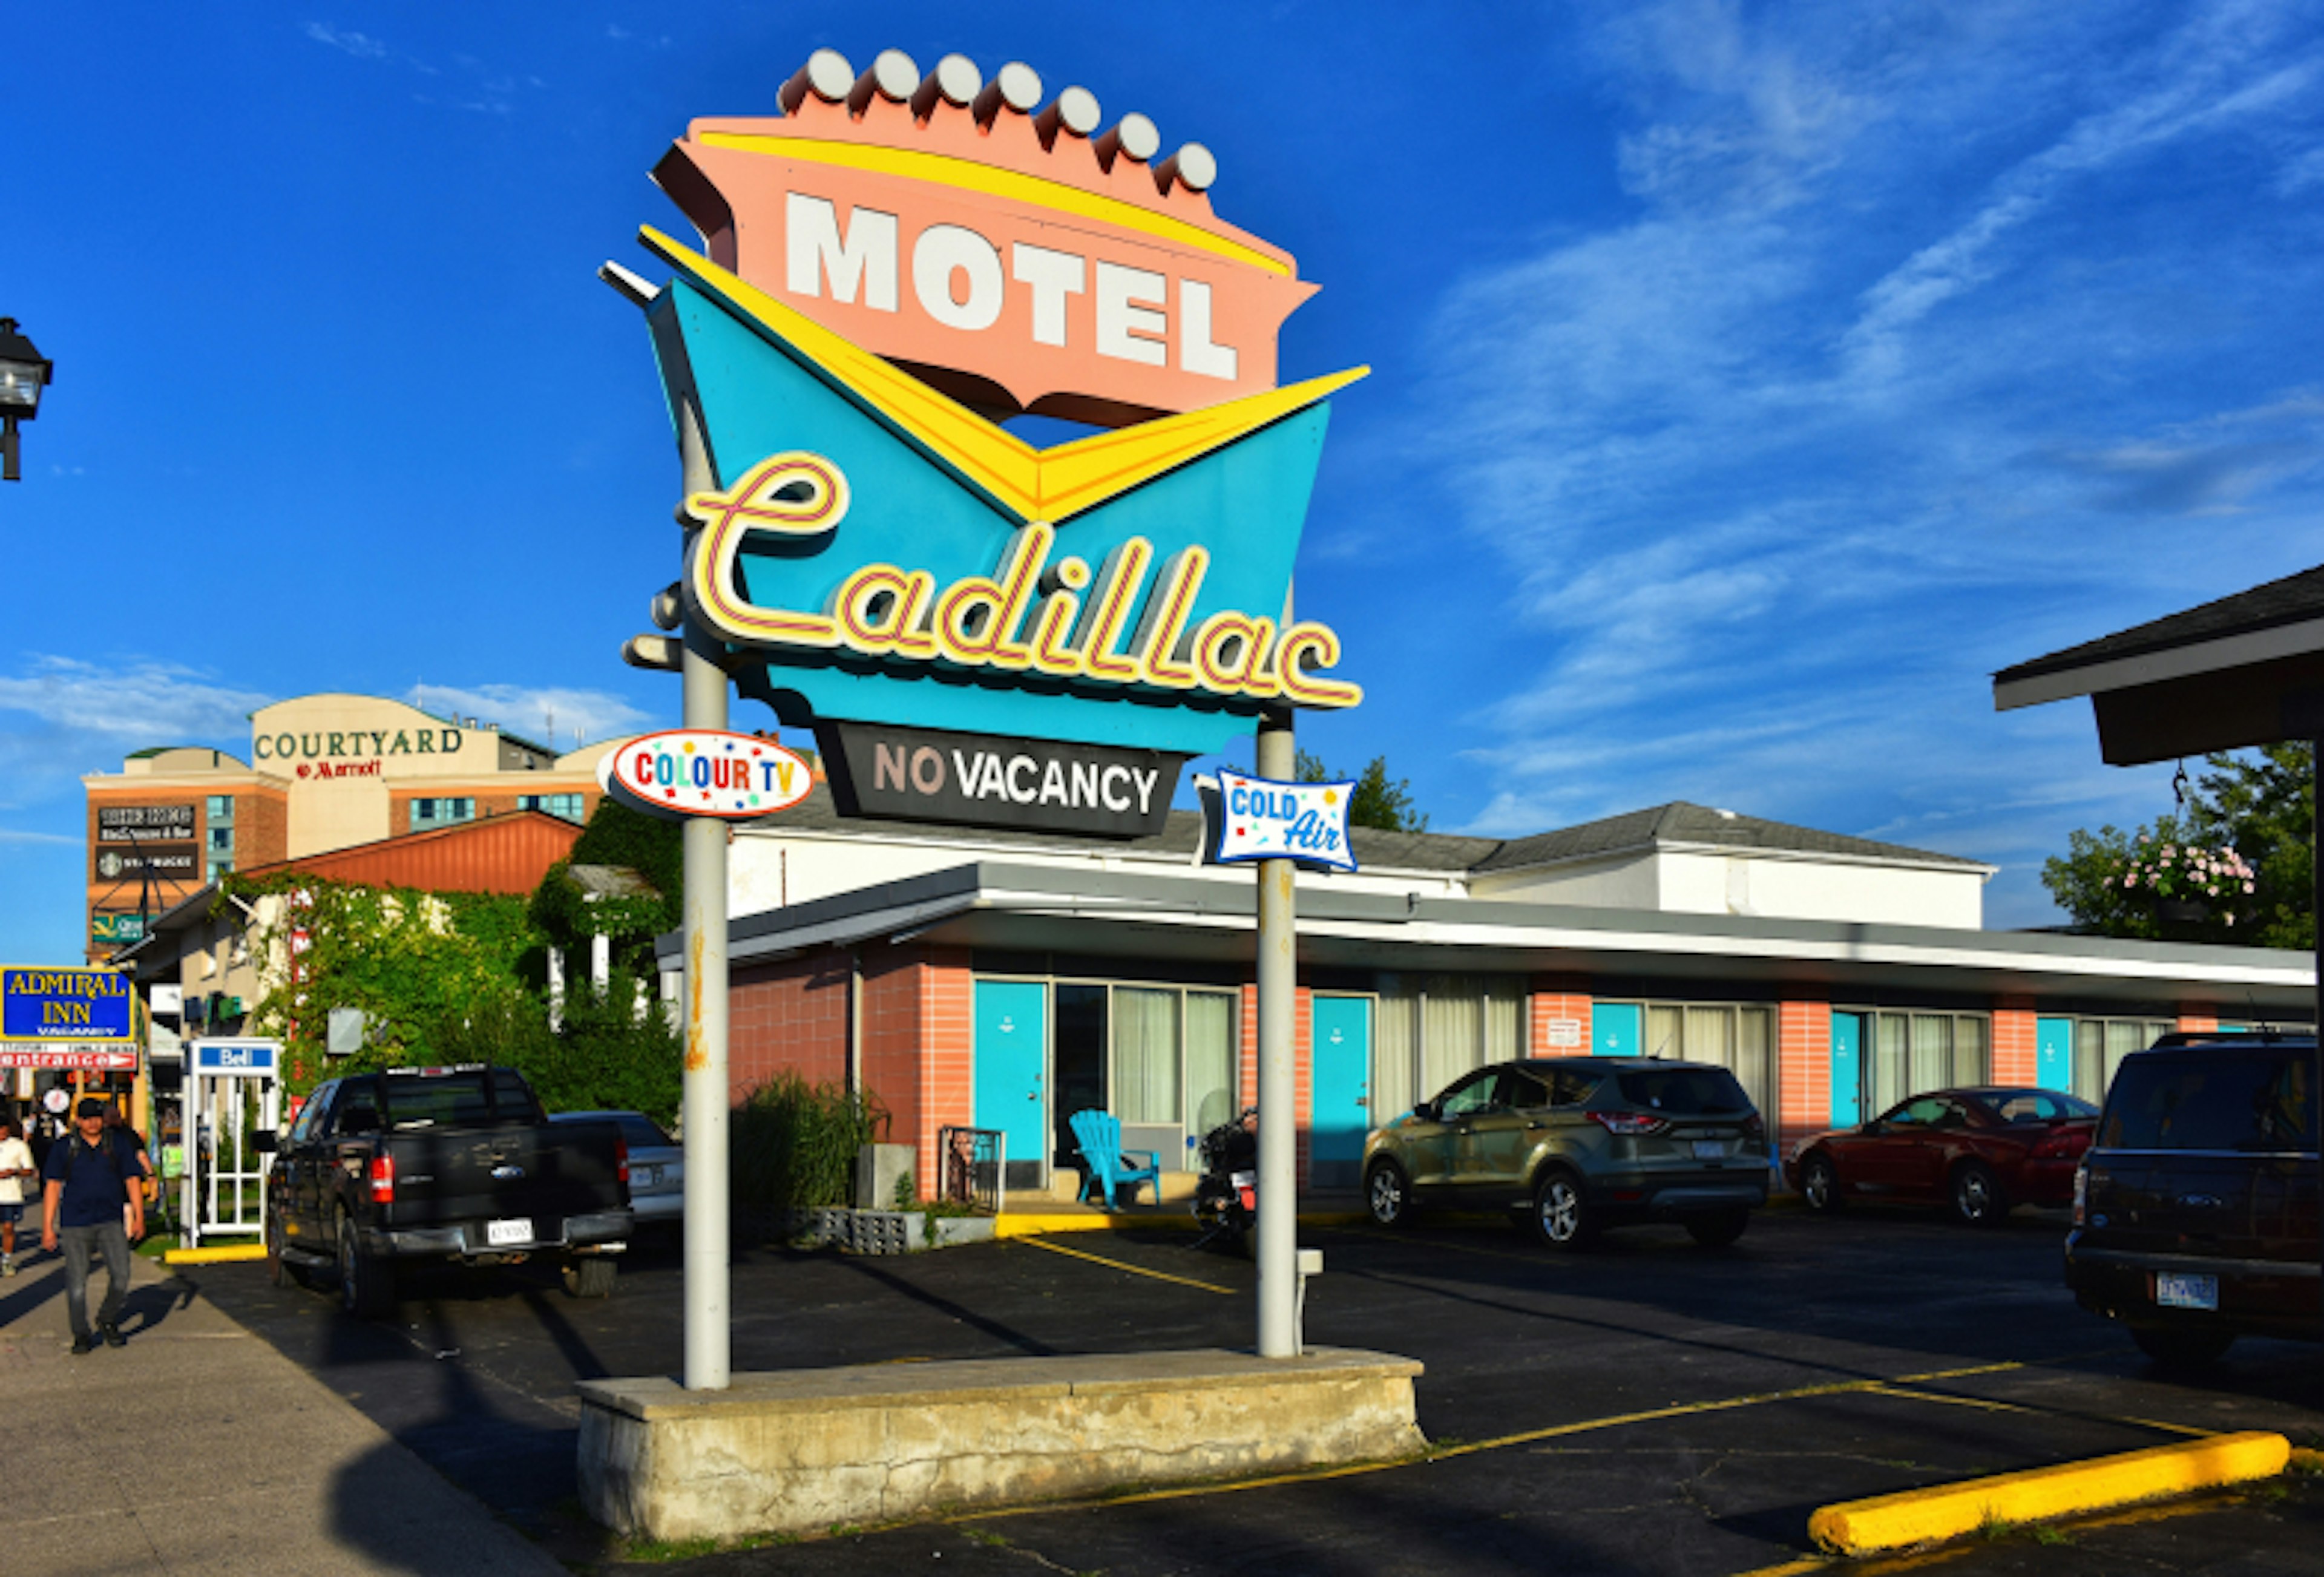 Toronto Motel Cadillac Sign